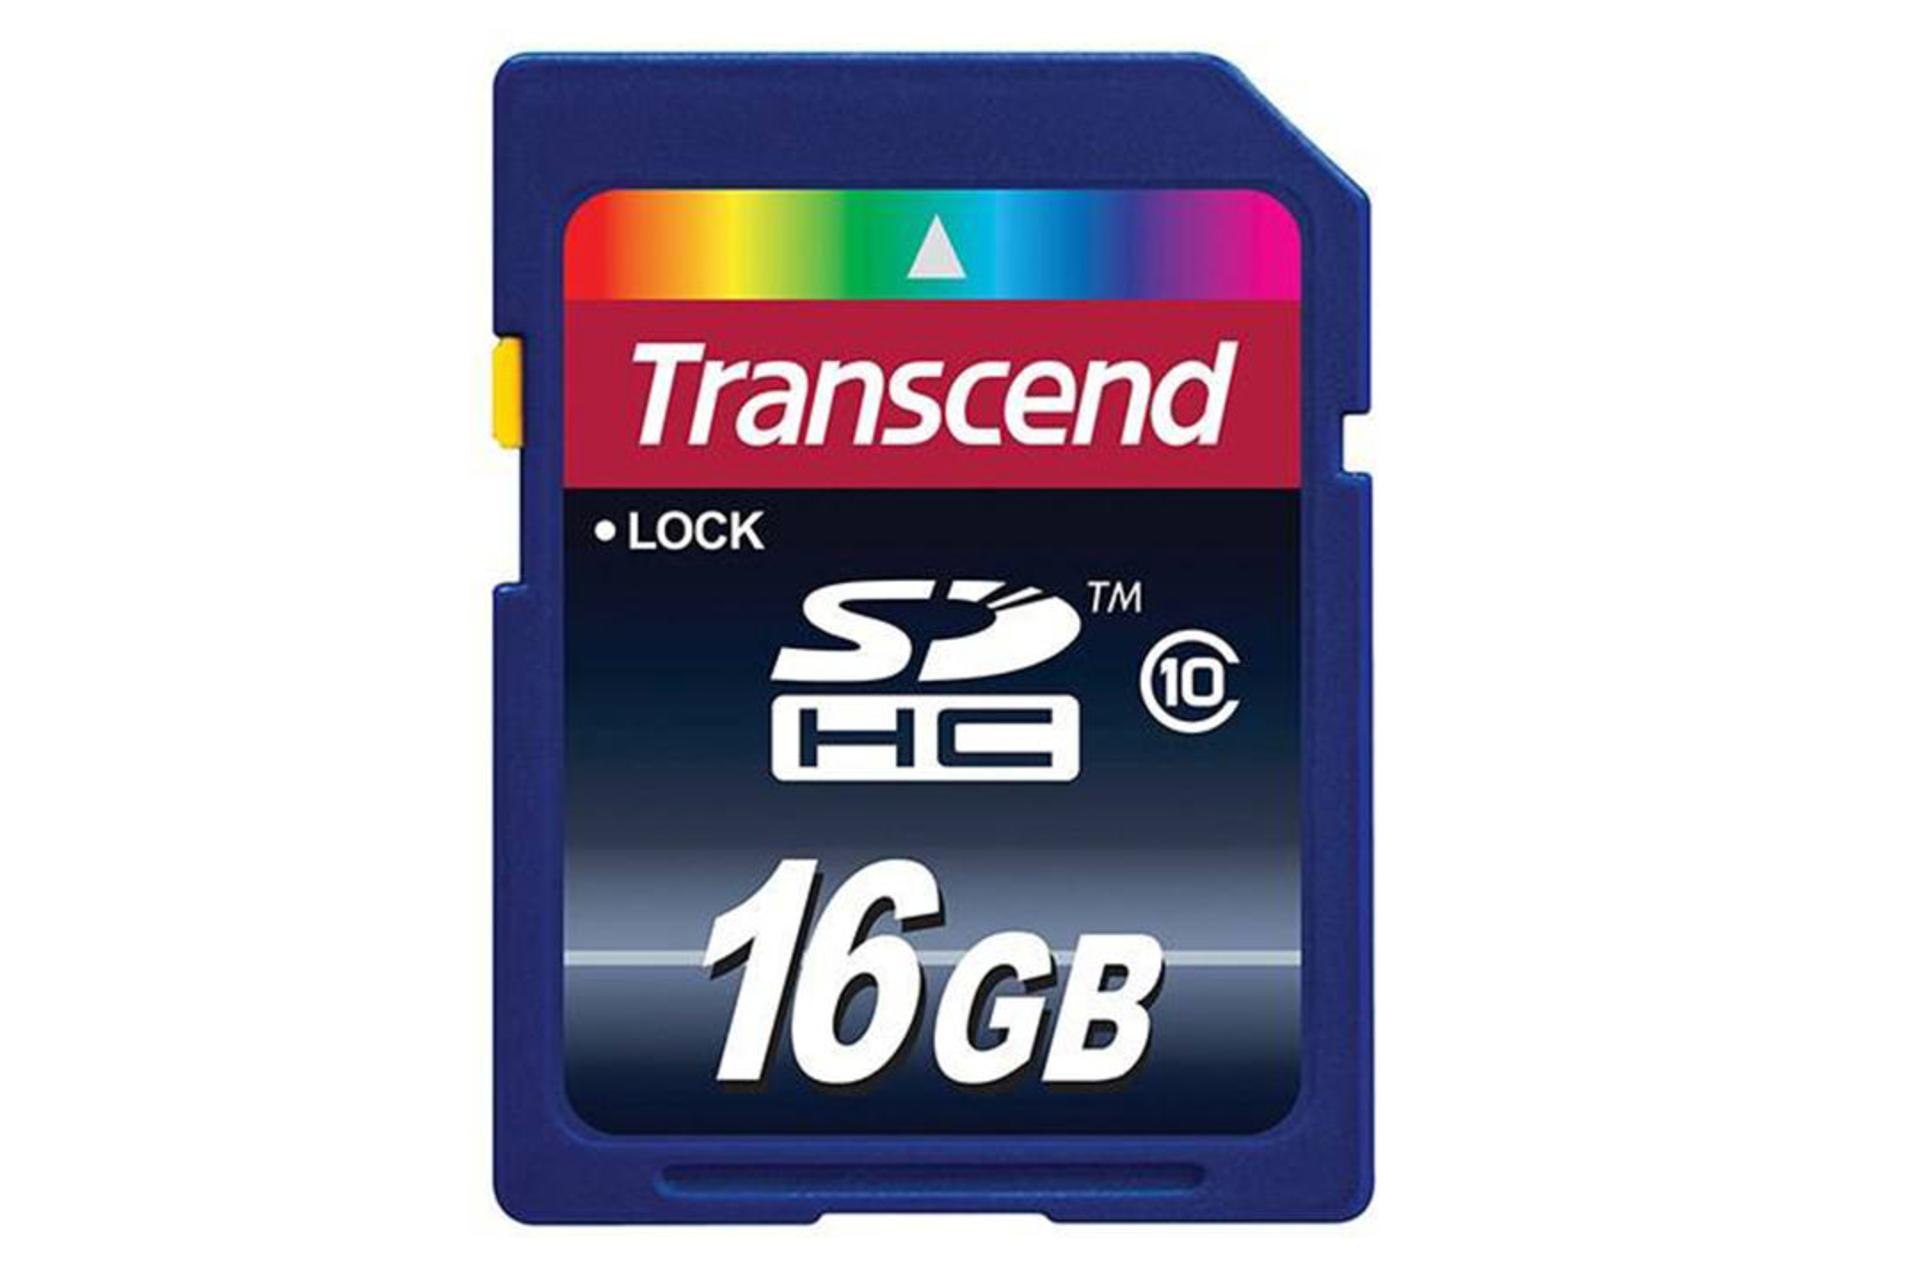 Transcend SDHC Class 10 16GB